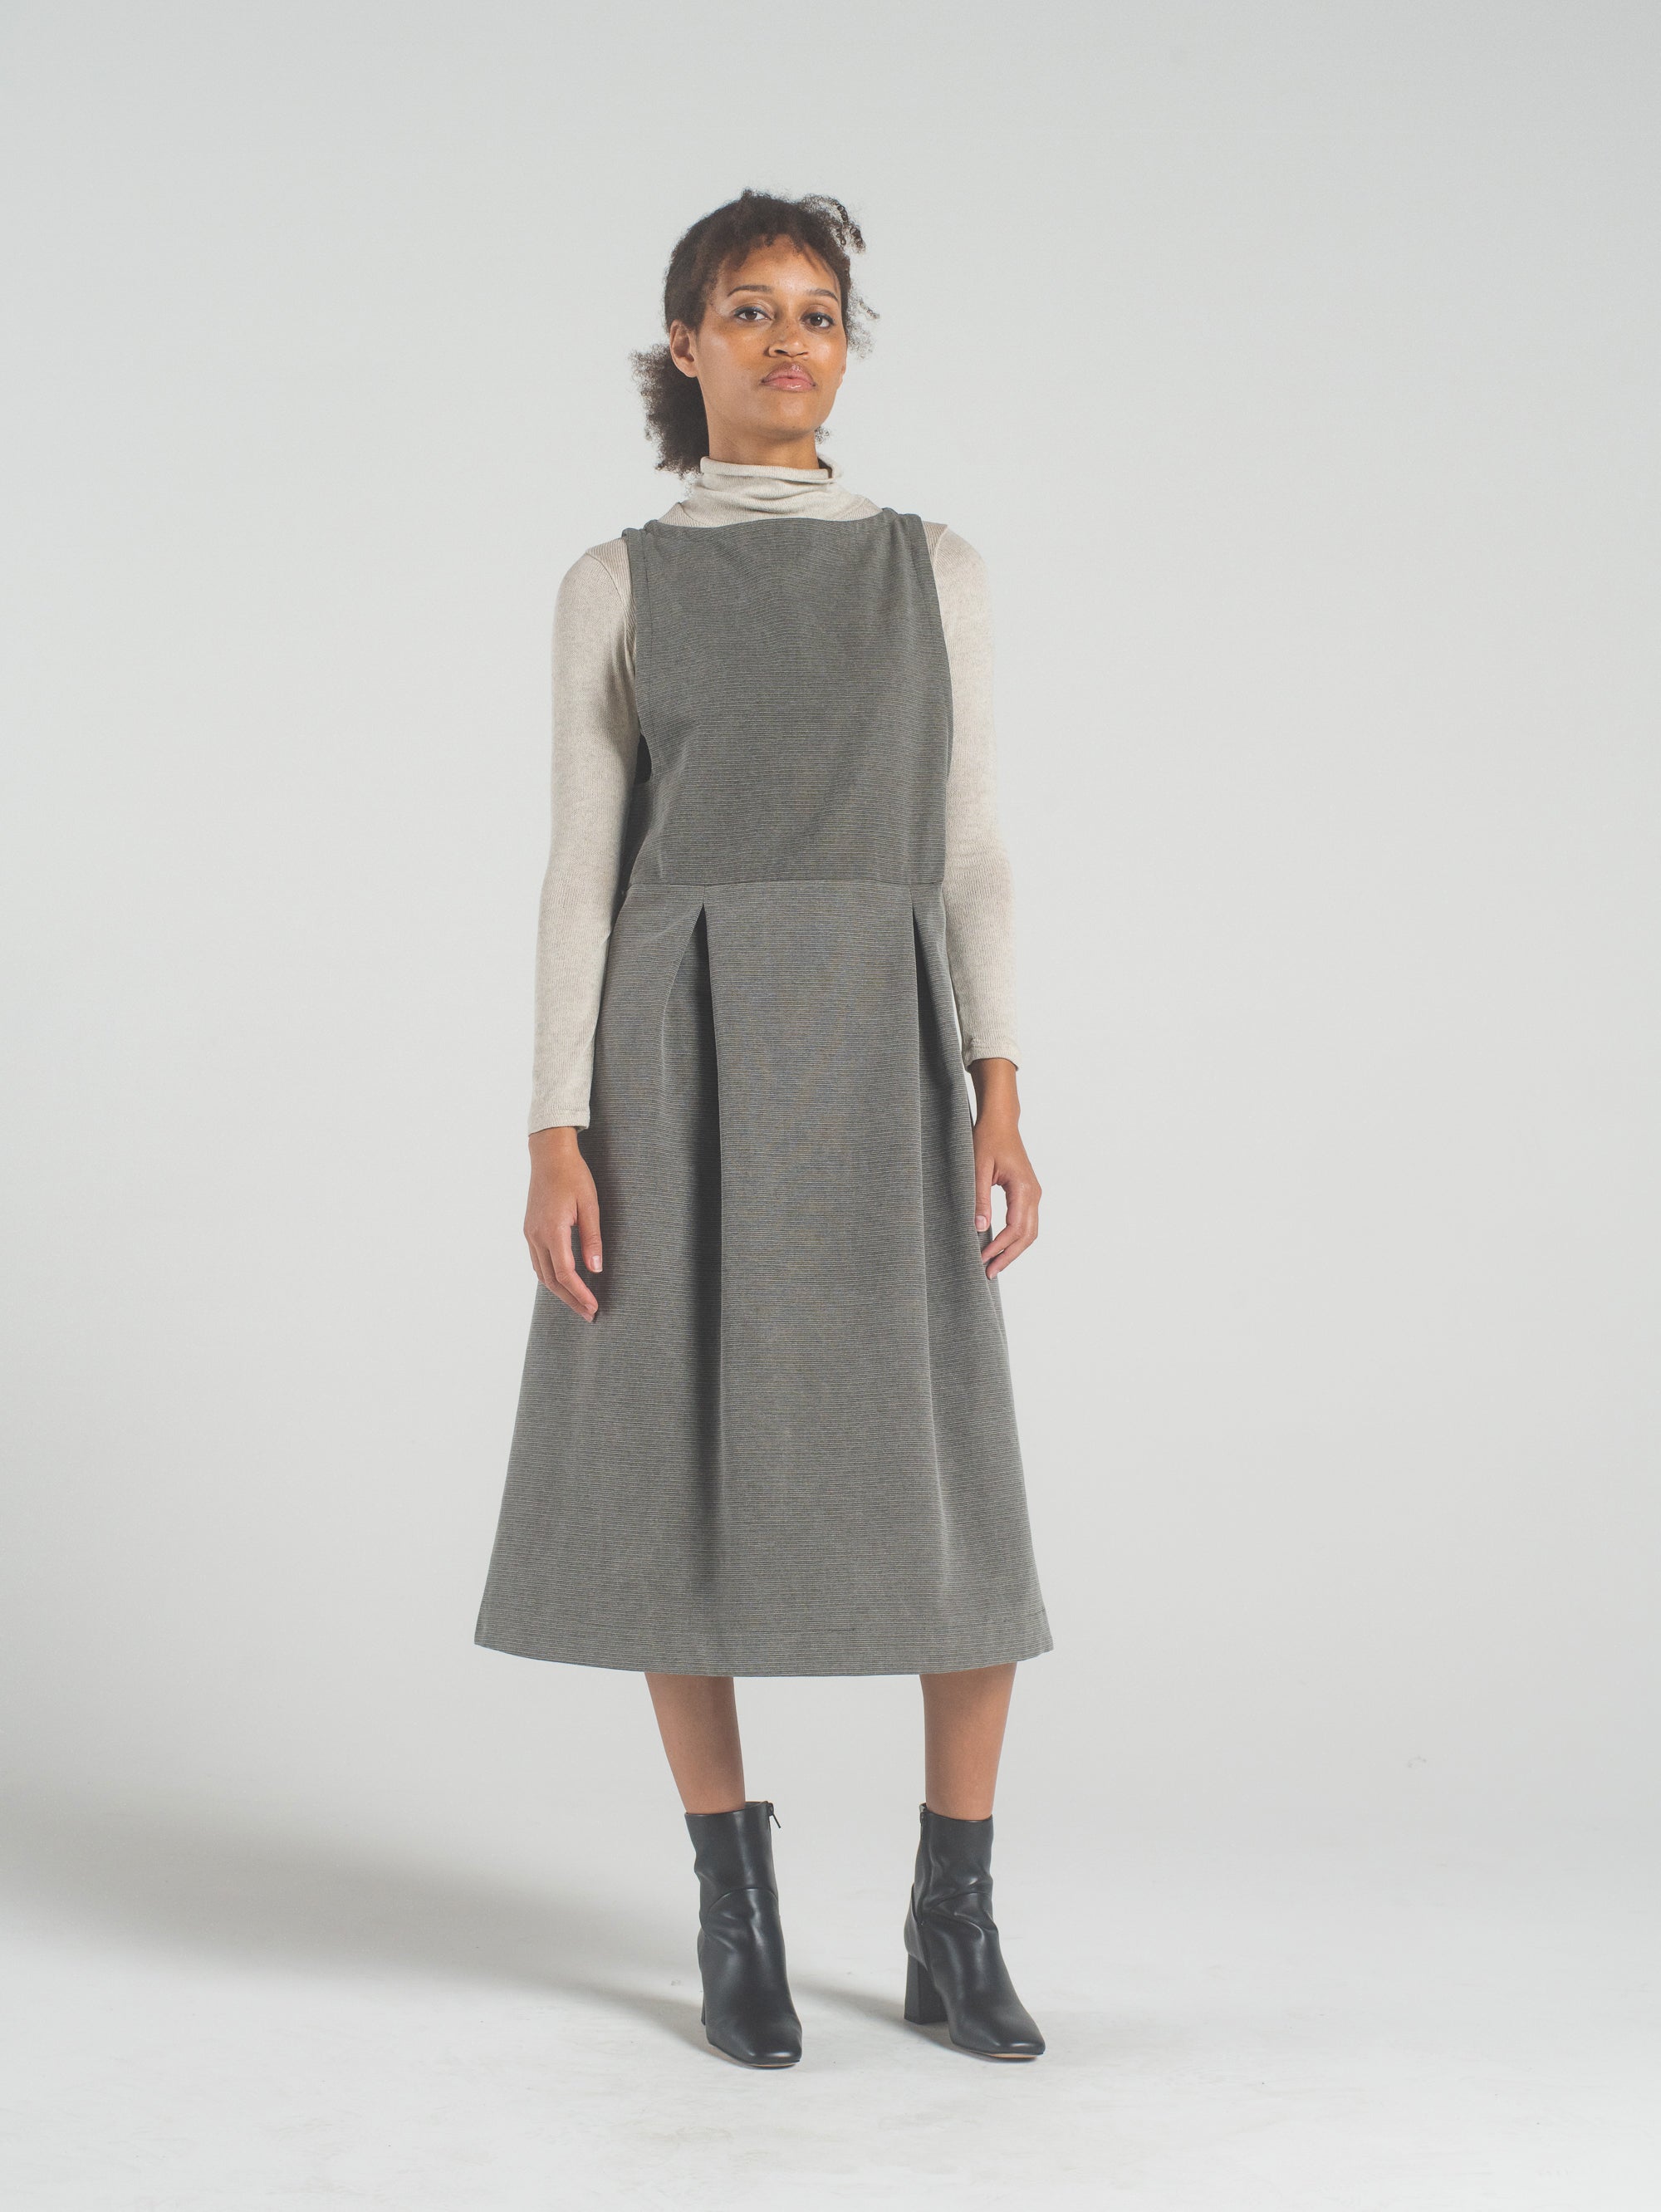 SAMPLE SALE - Marieke Dress in Graphite - SMALL/MEDIUM